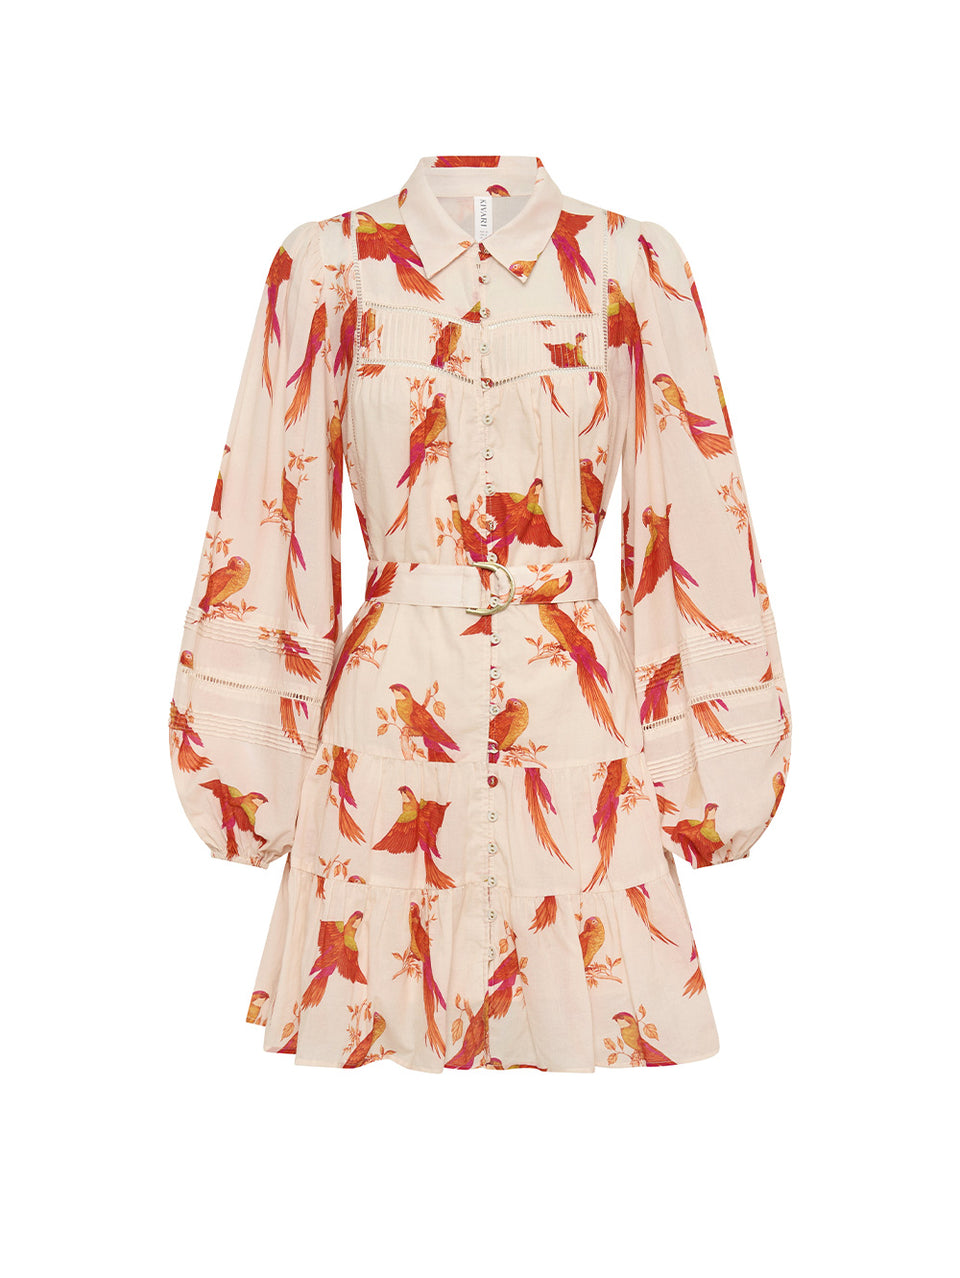 Kaylee Mini Dress KIVARI | Pink and orange bird printed mini dress